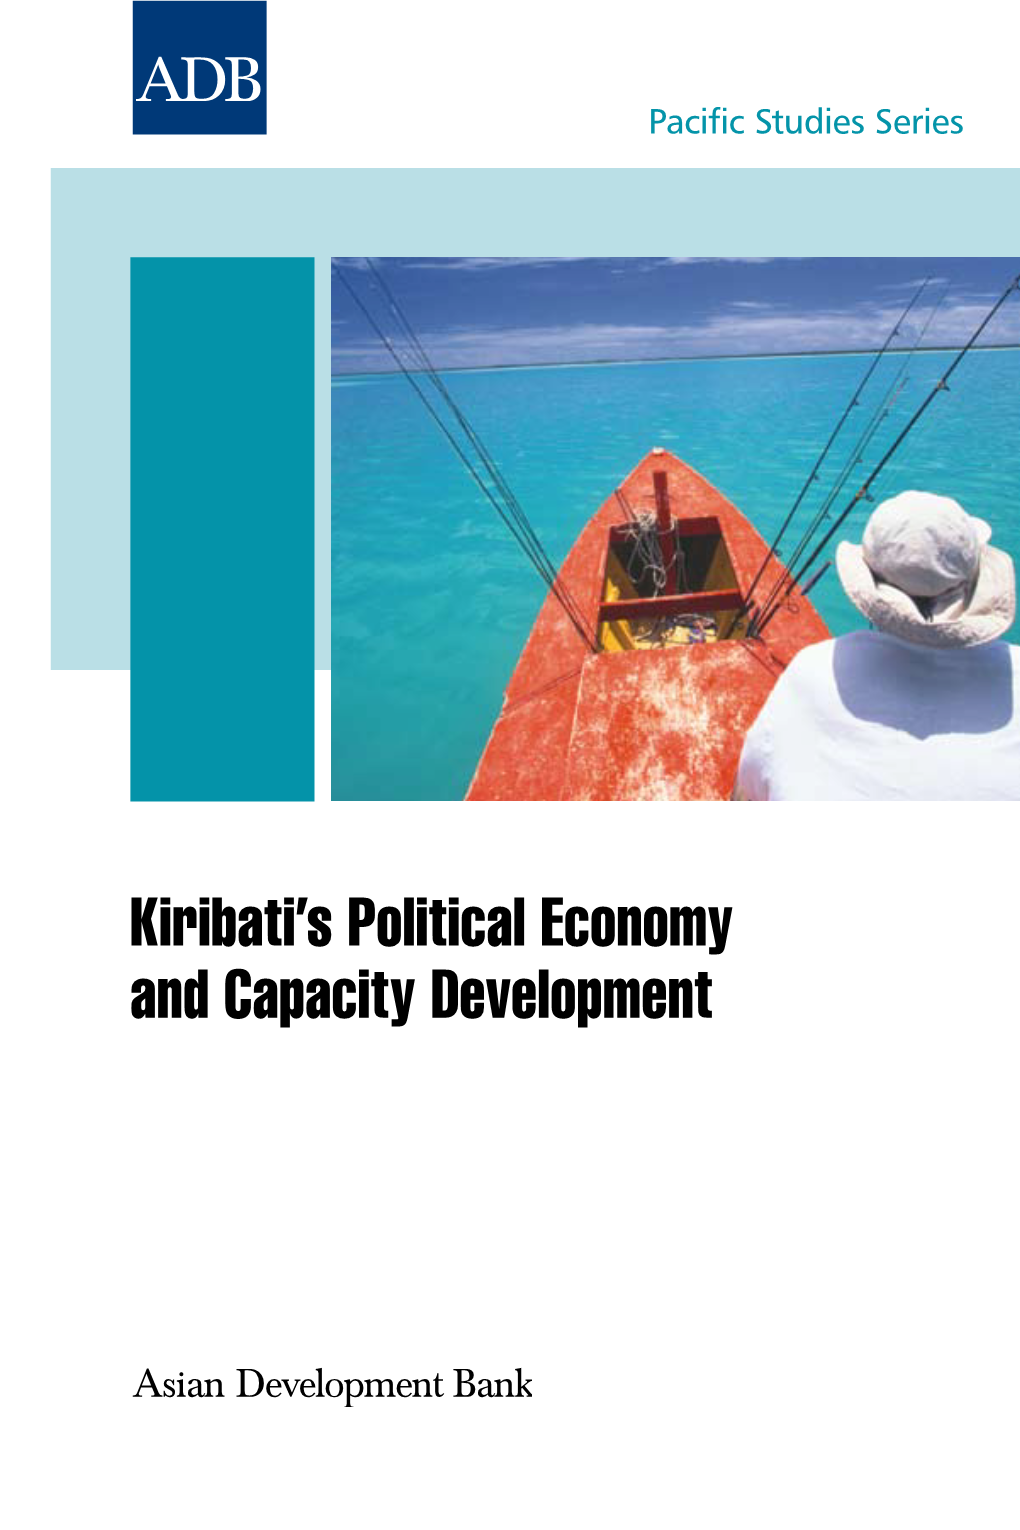 Kiribati's Political Economy and Capacity Development